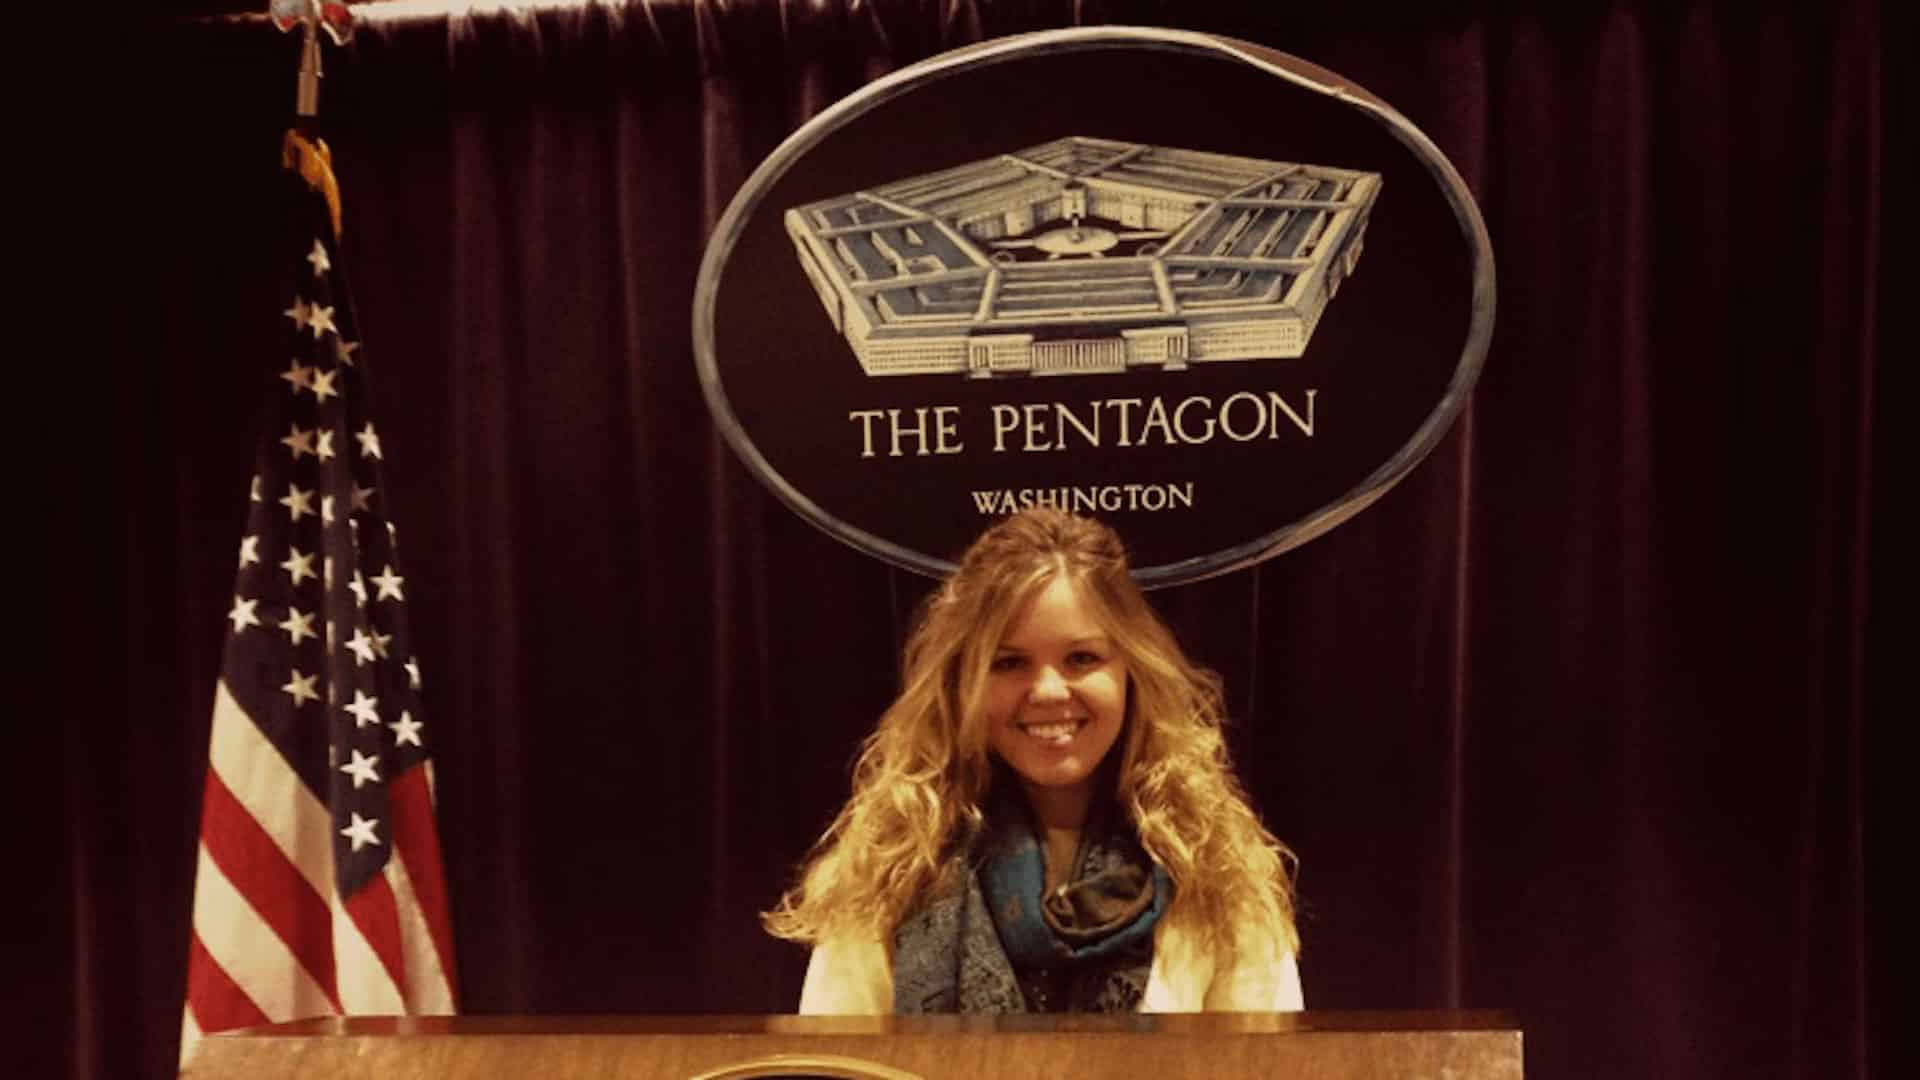 Pentagon tour